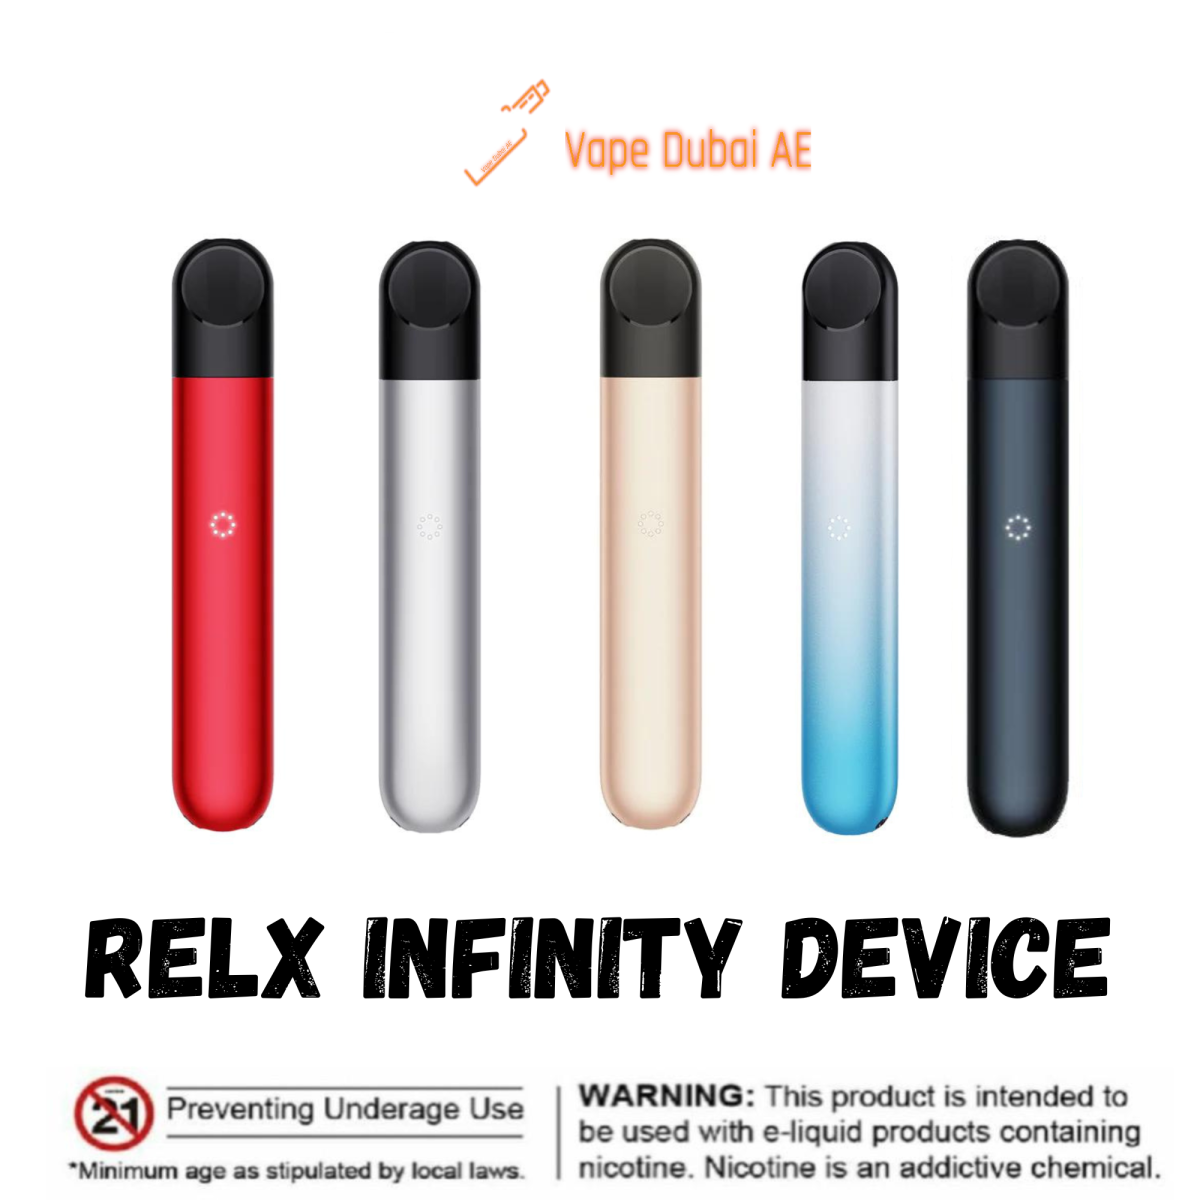 New Relx Infinity Vape Device